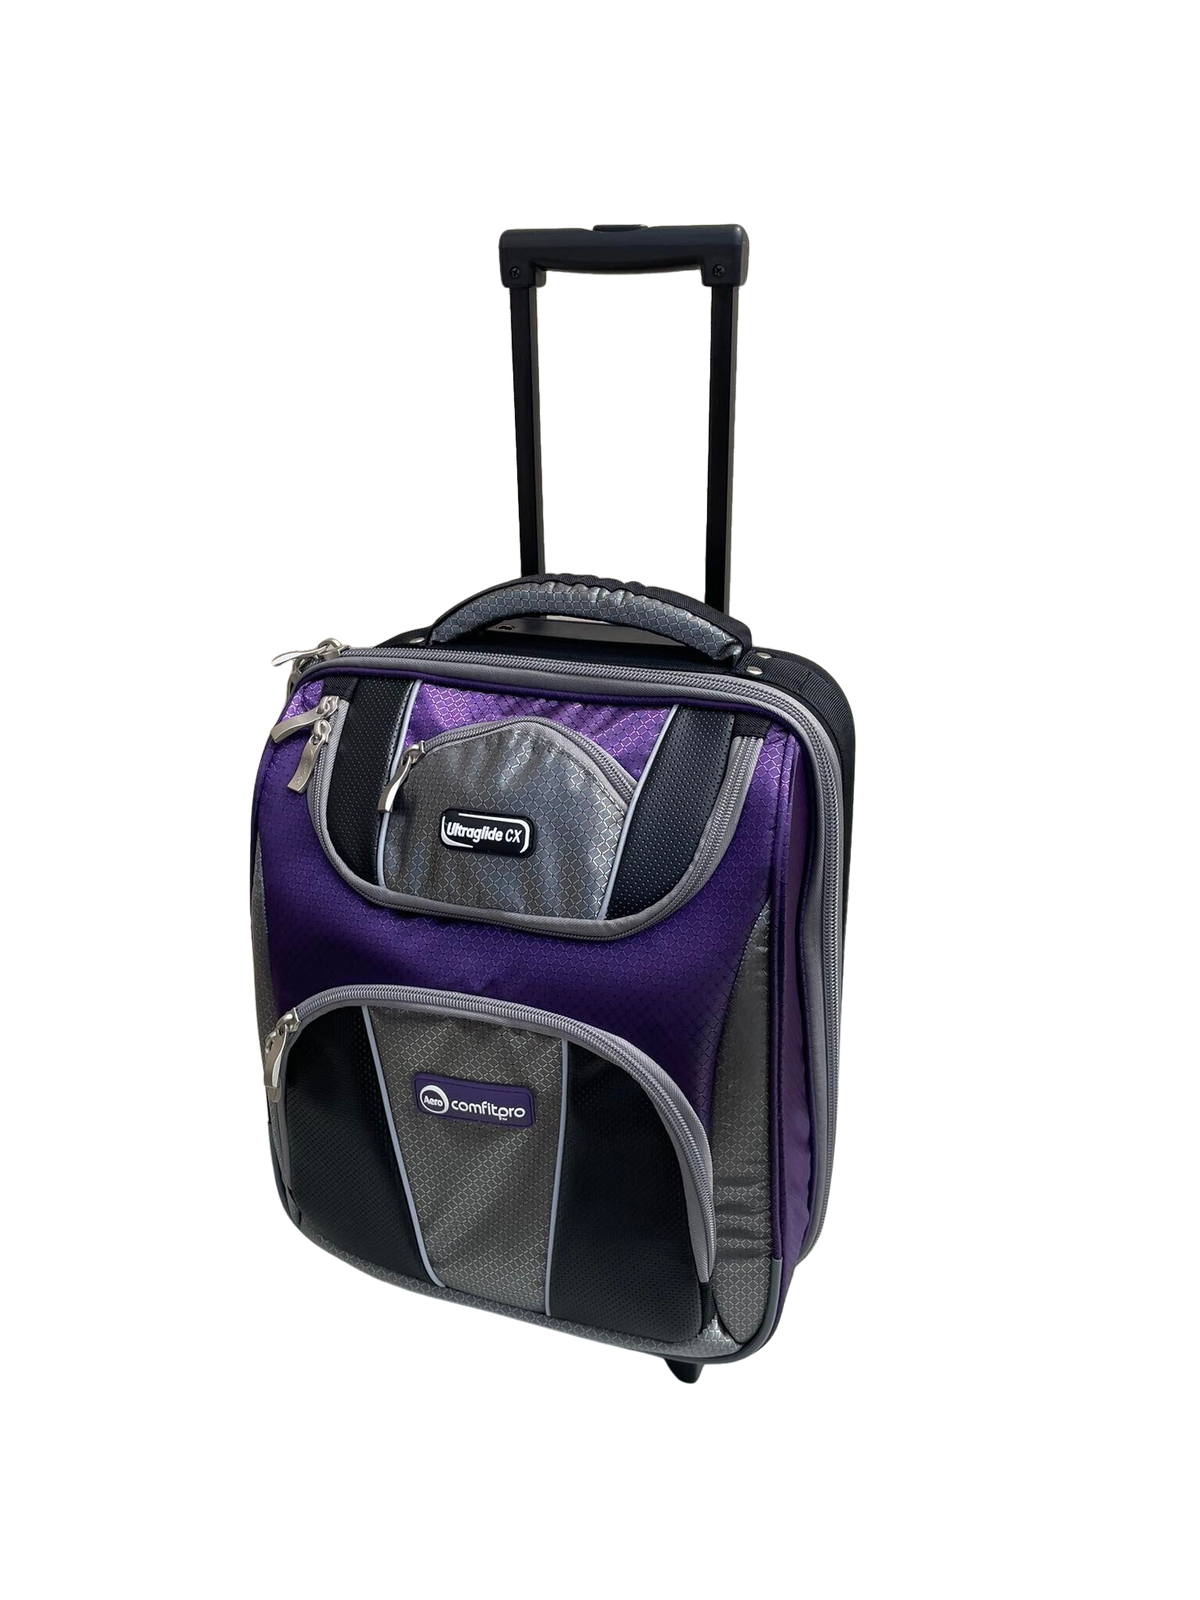 Aero CX Ultraglide Bag - Purple